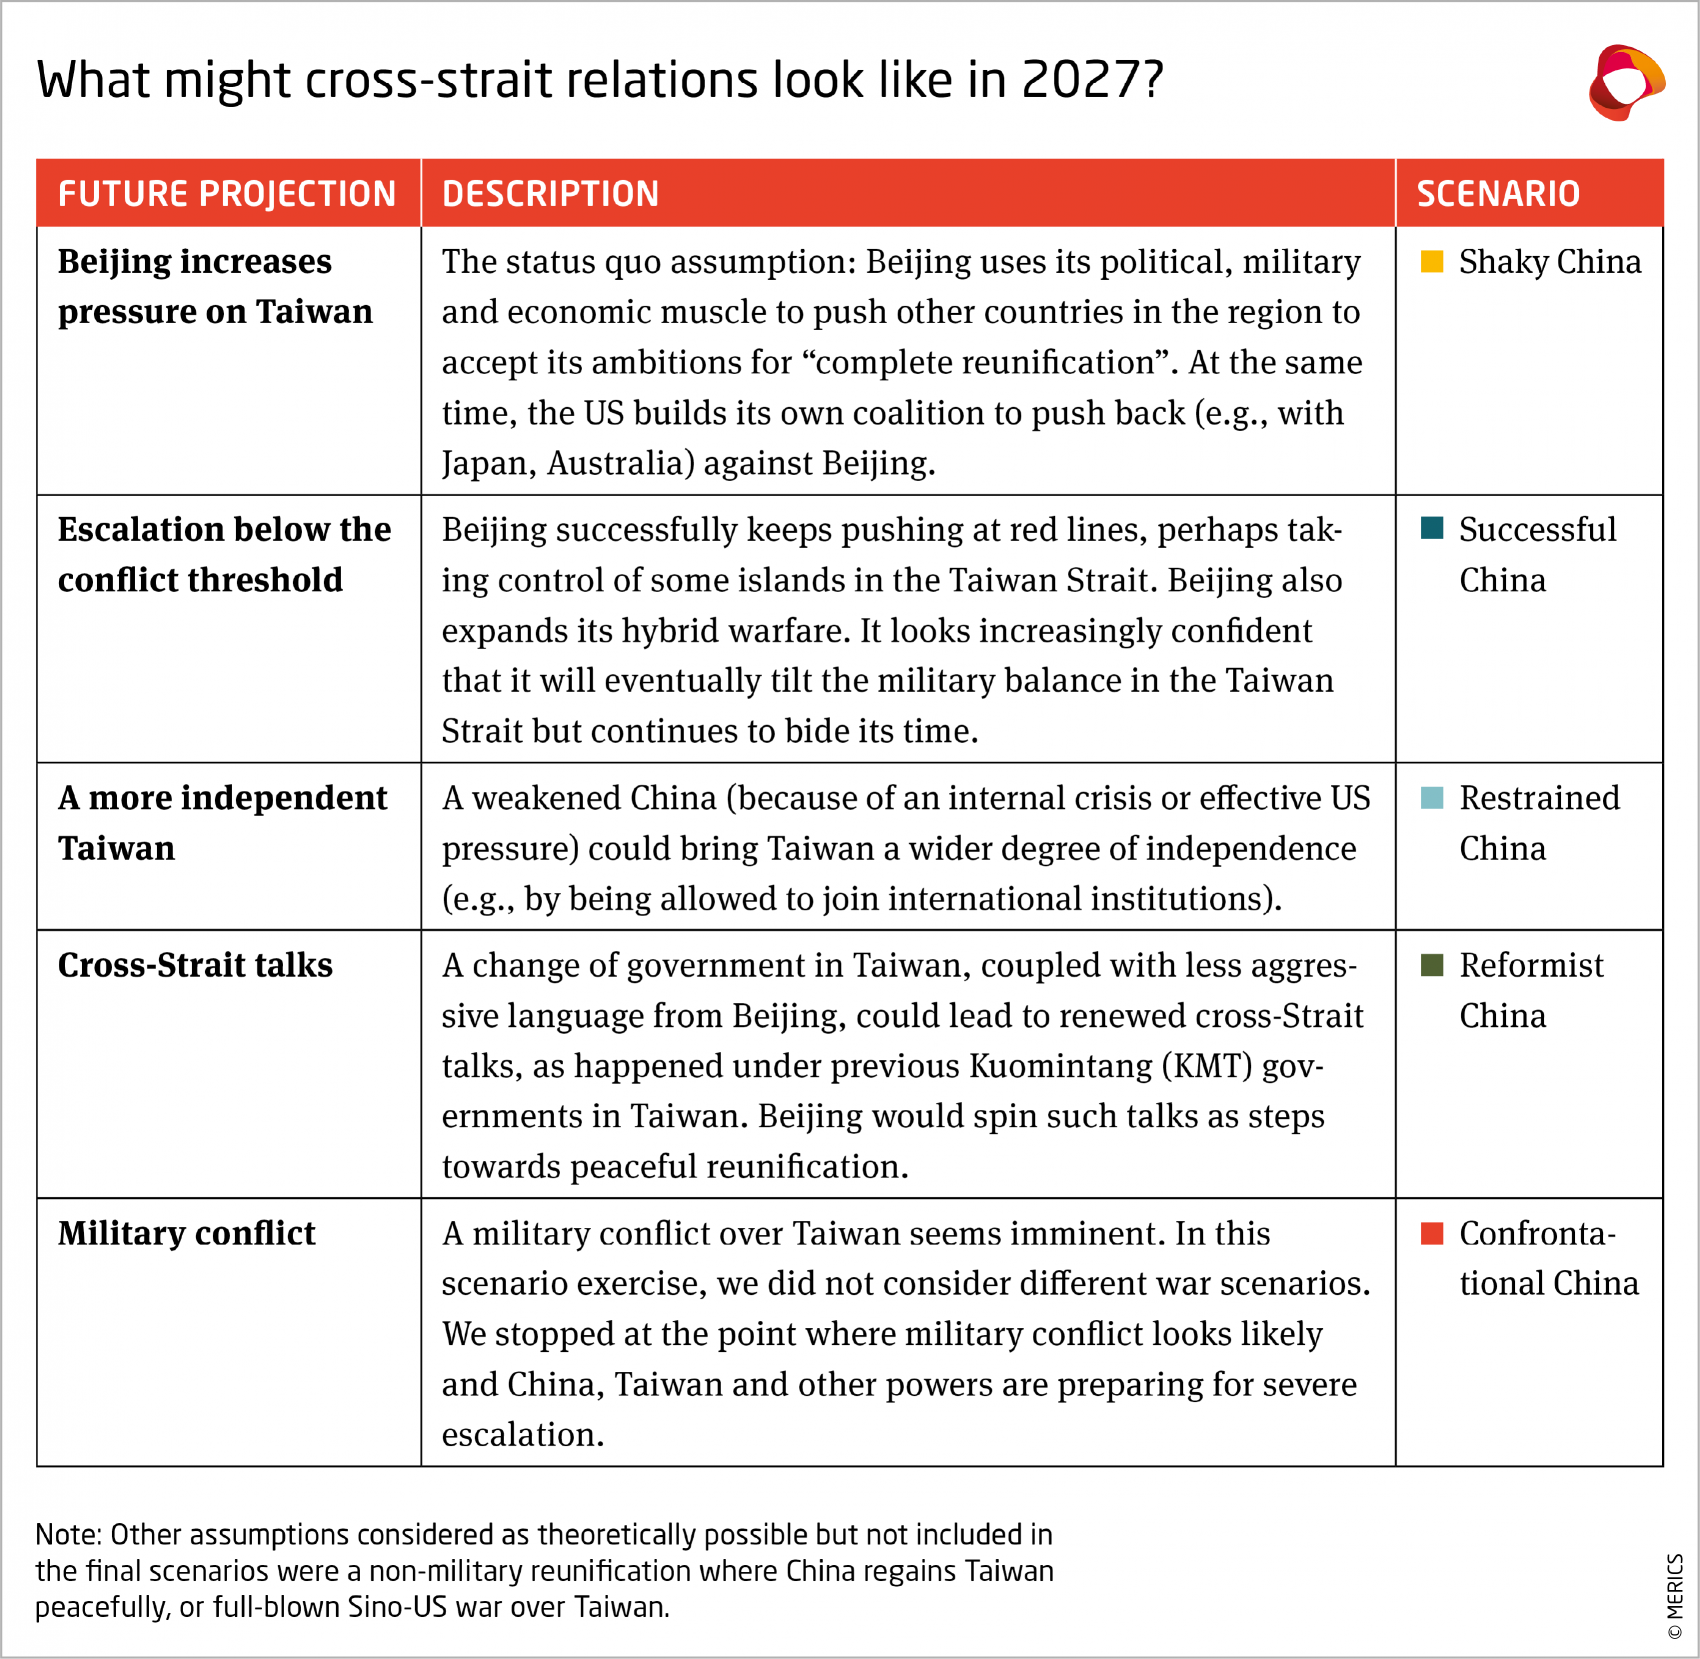 Cross-strait relations in 2027